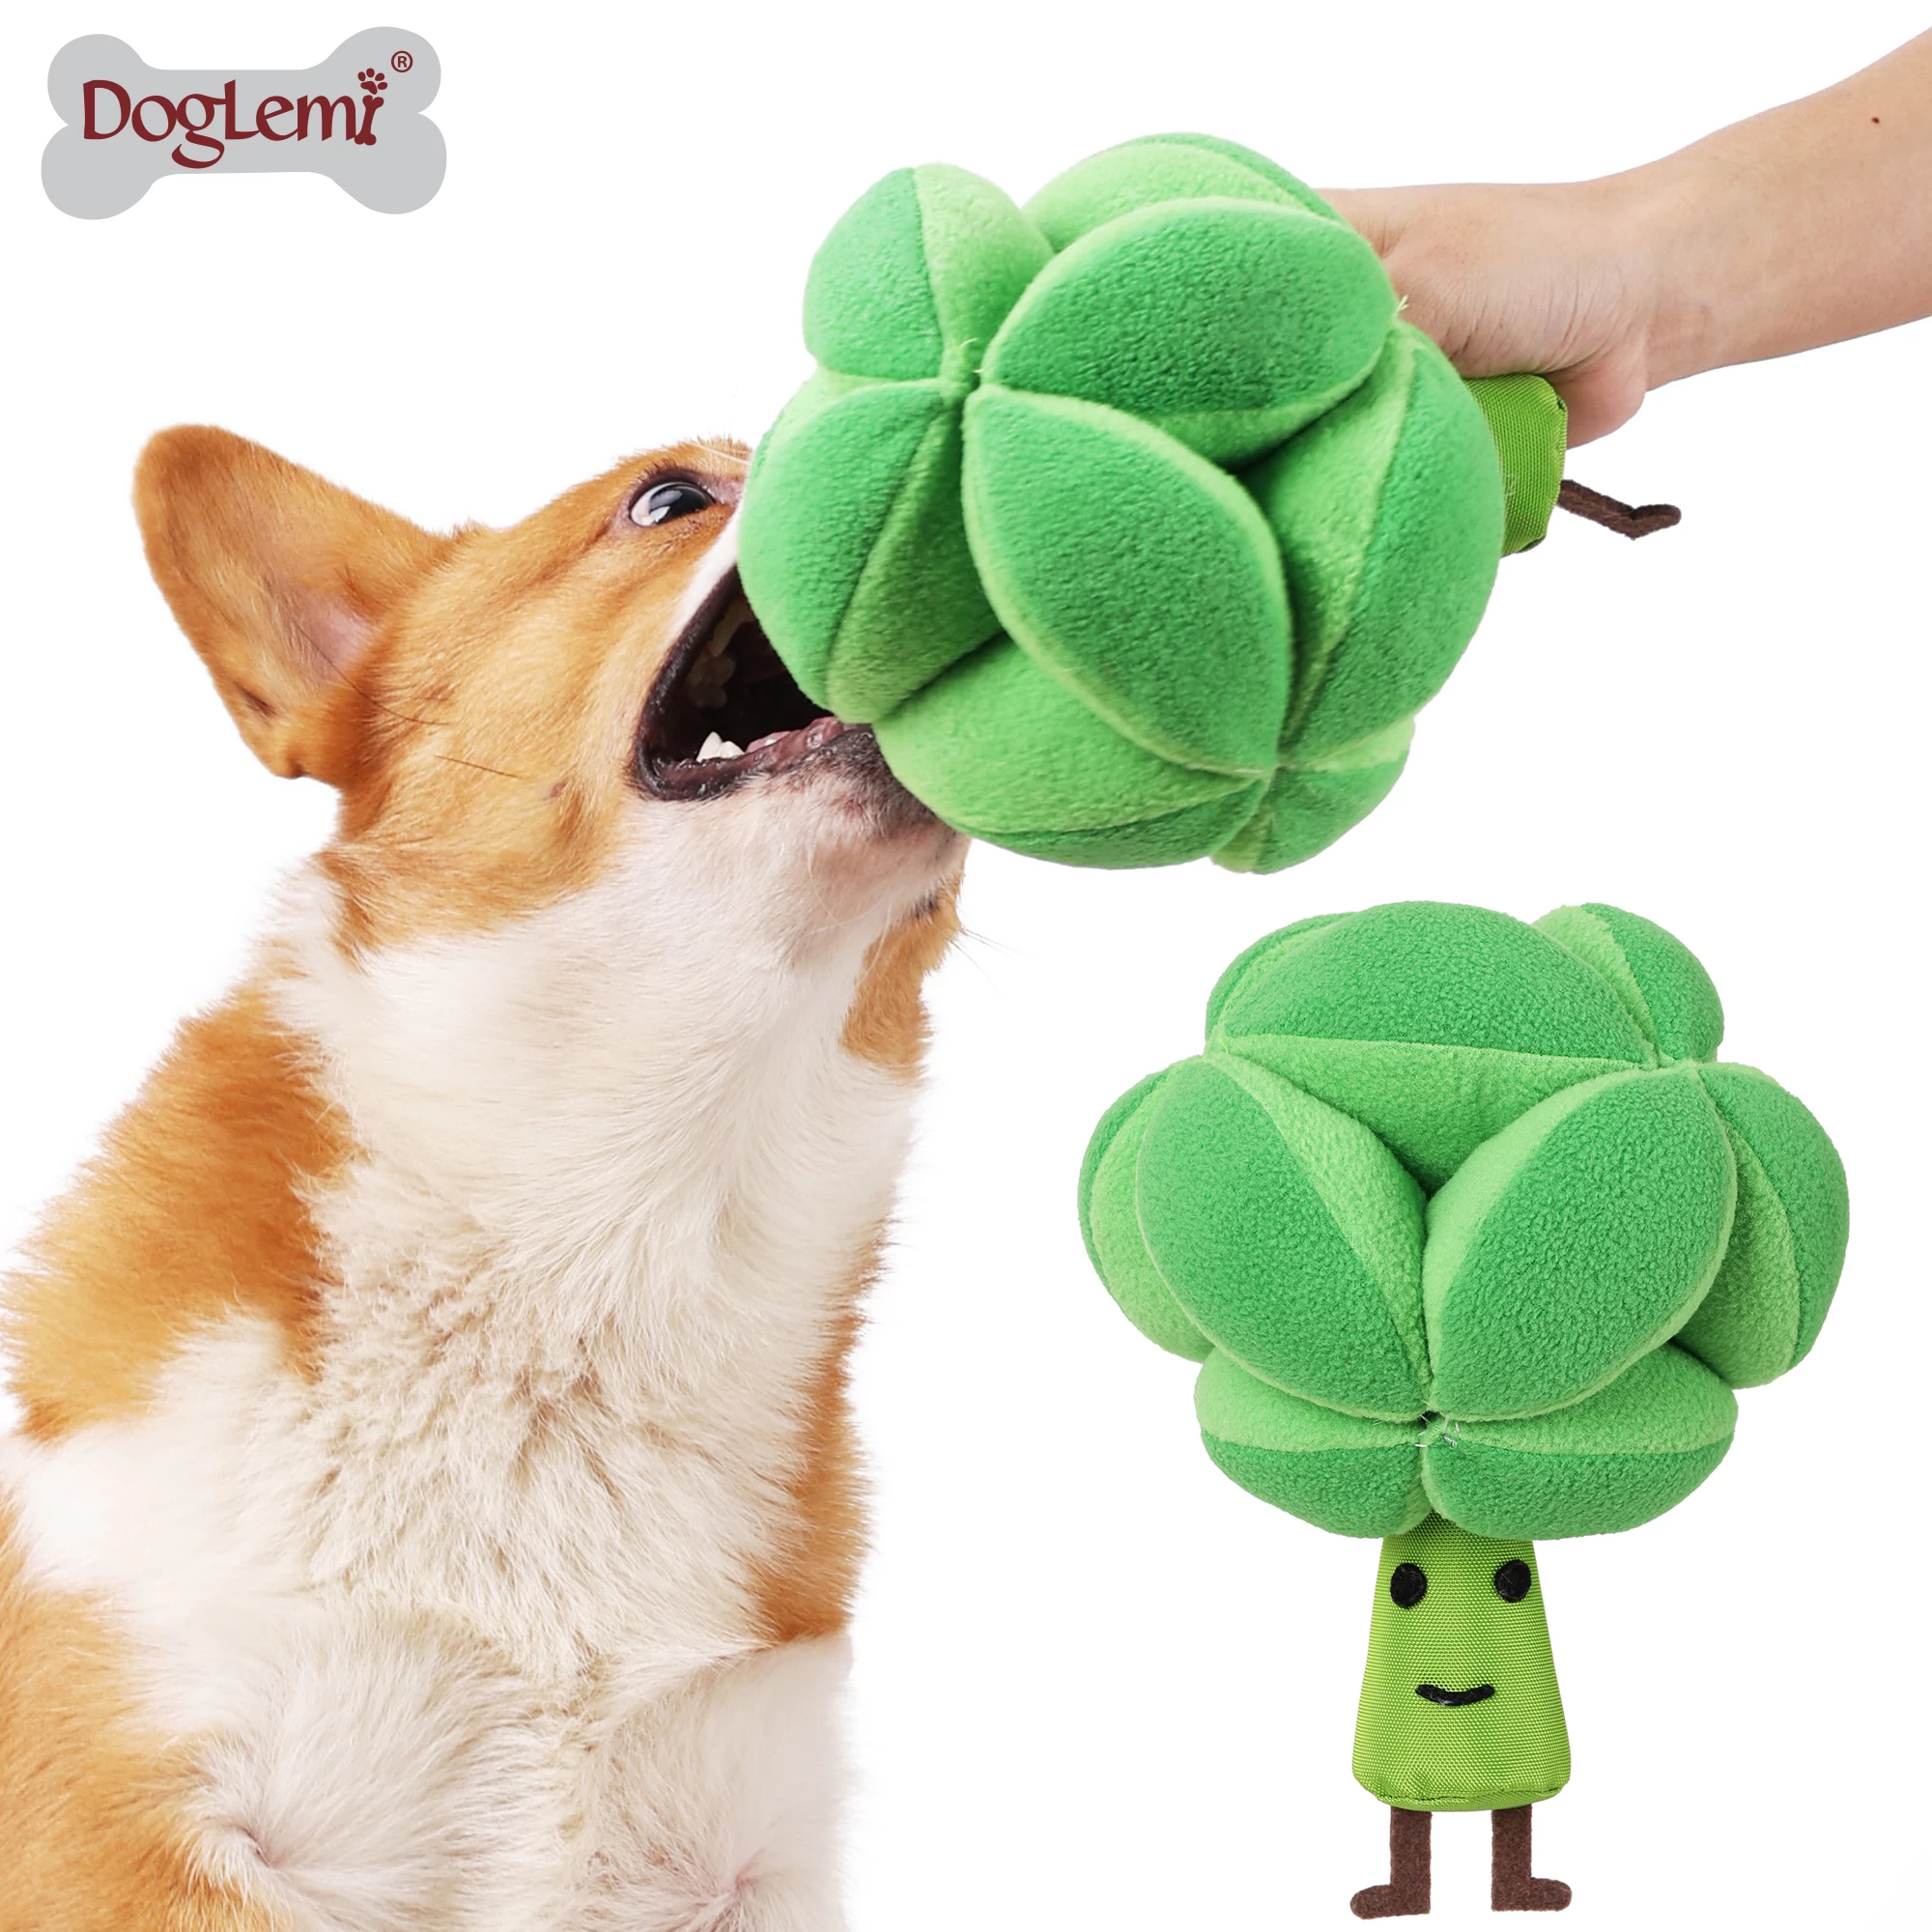 Broccoli Design Dog Snuffle Ball